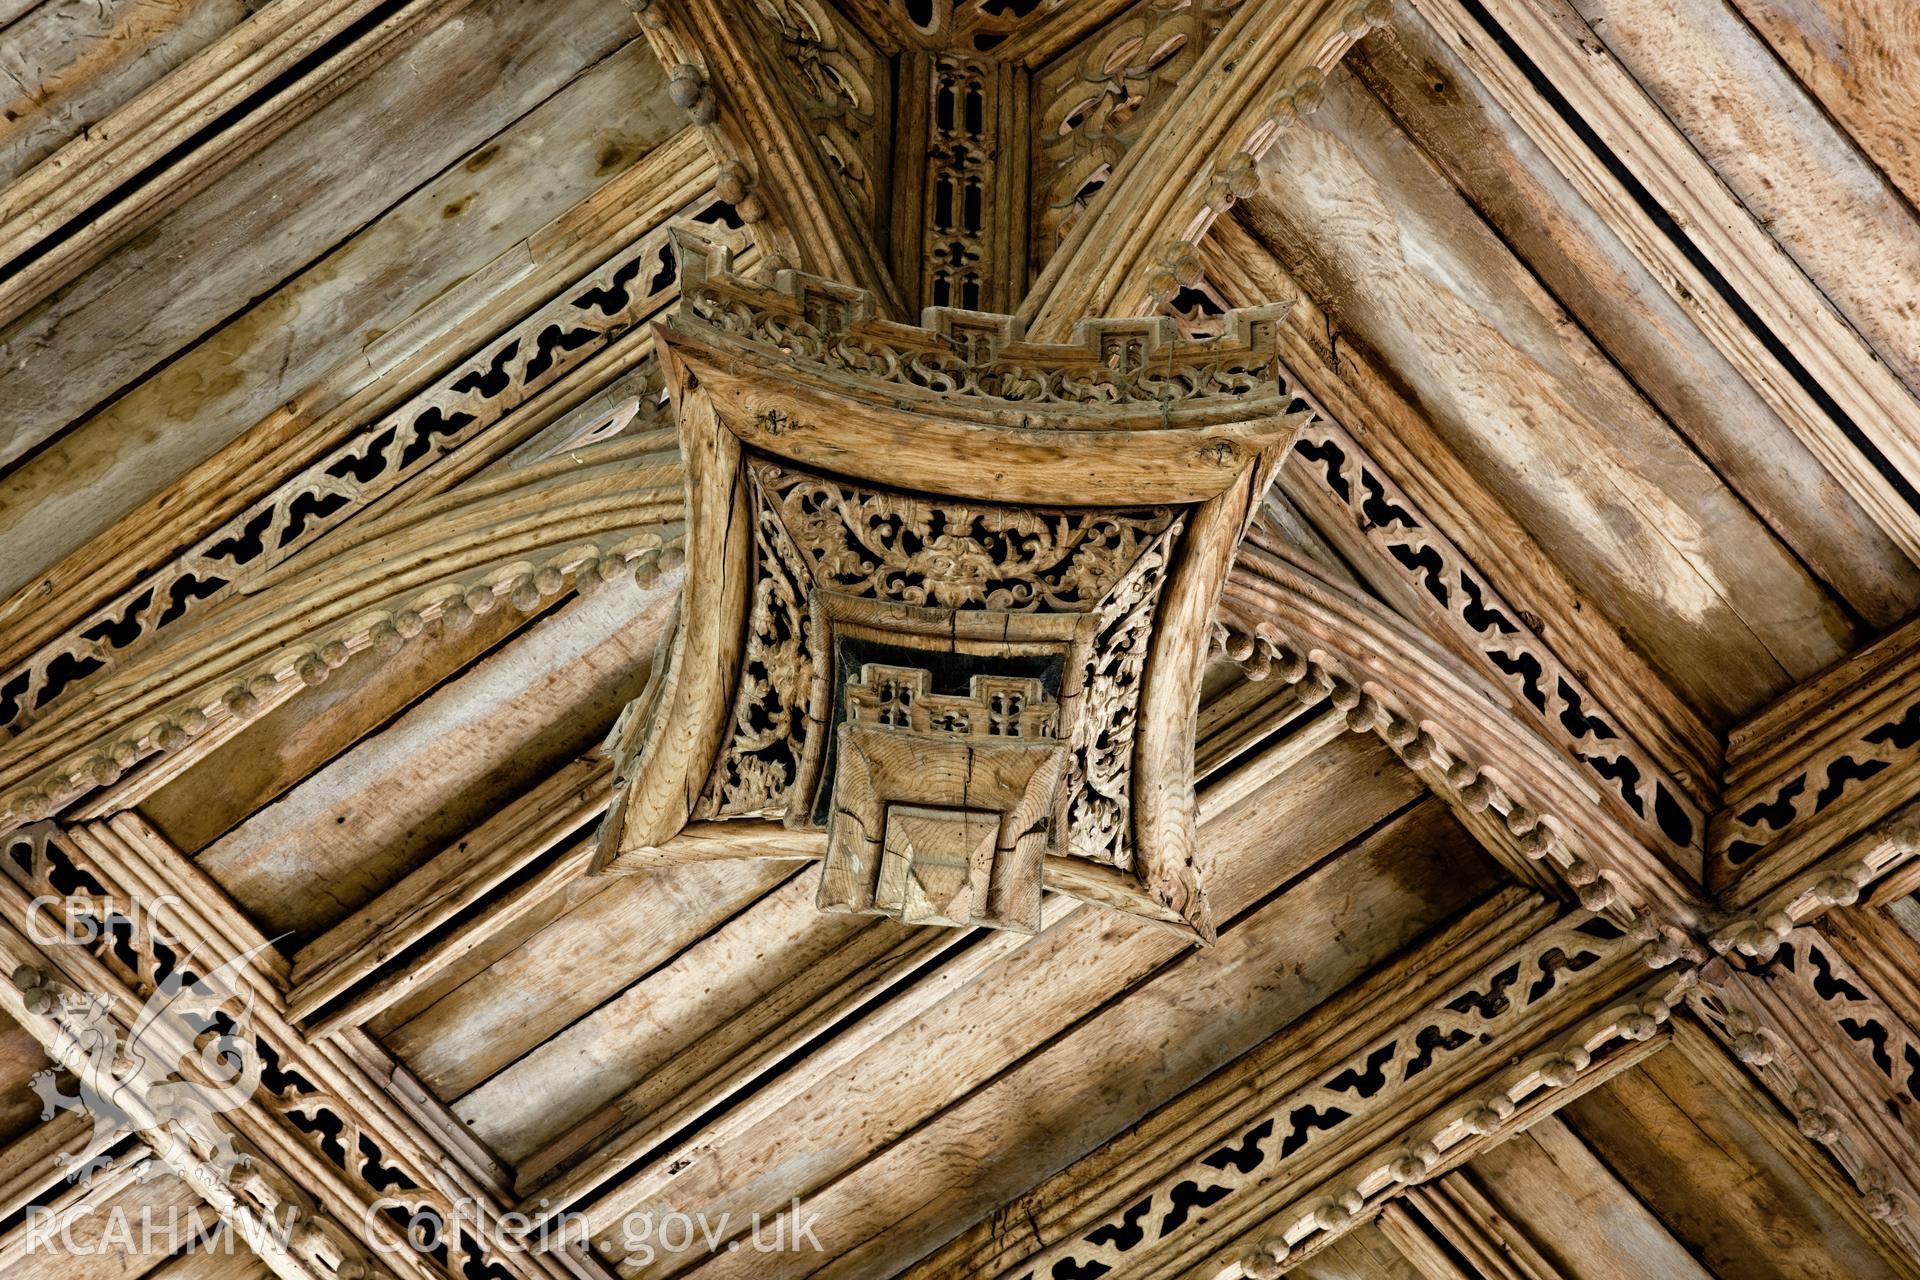 Pendant in St David's ceiling.